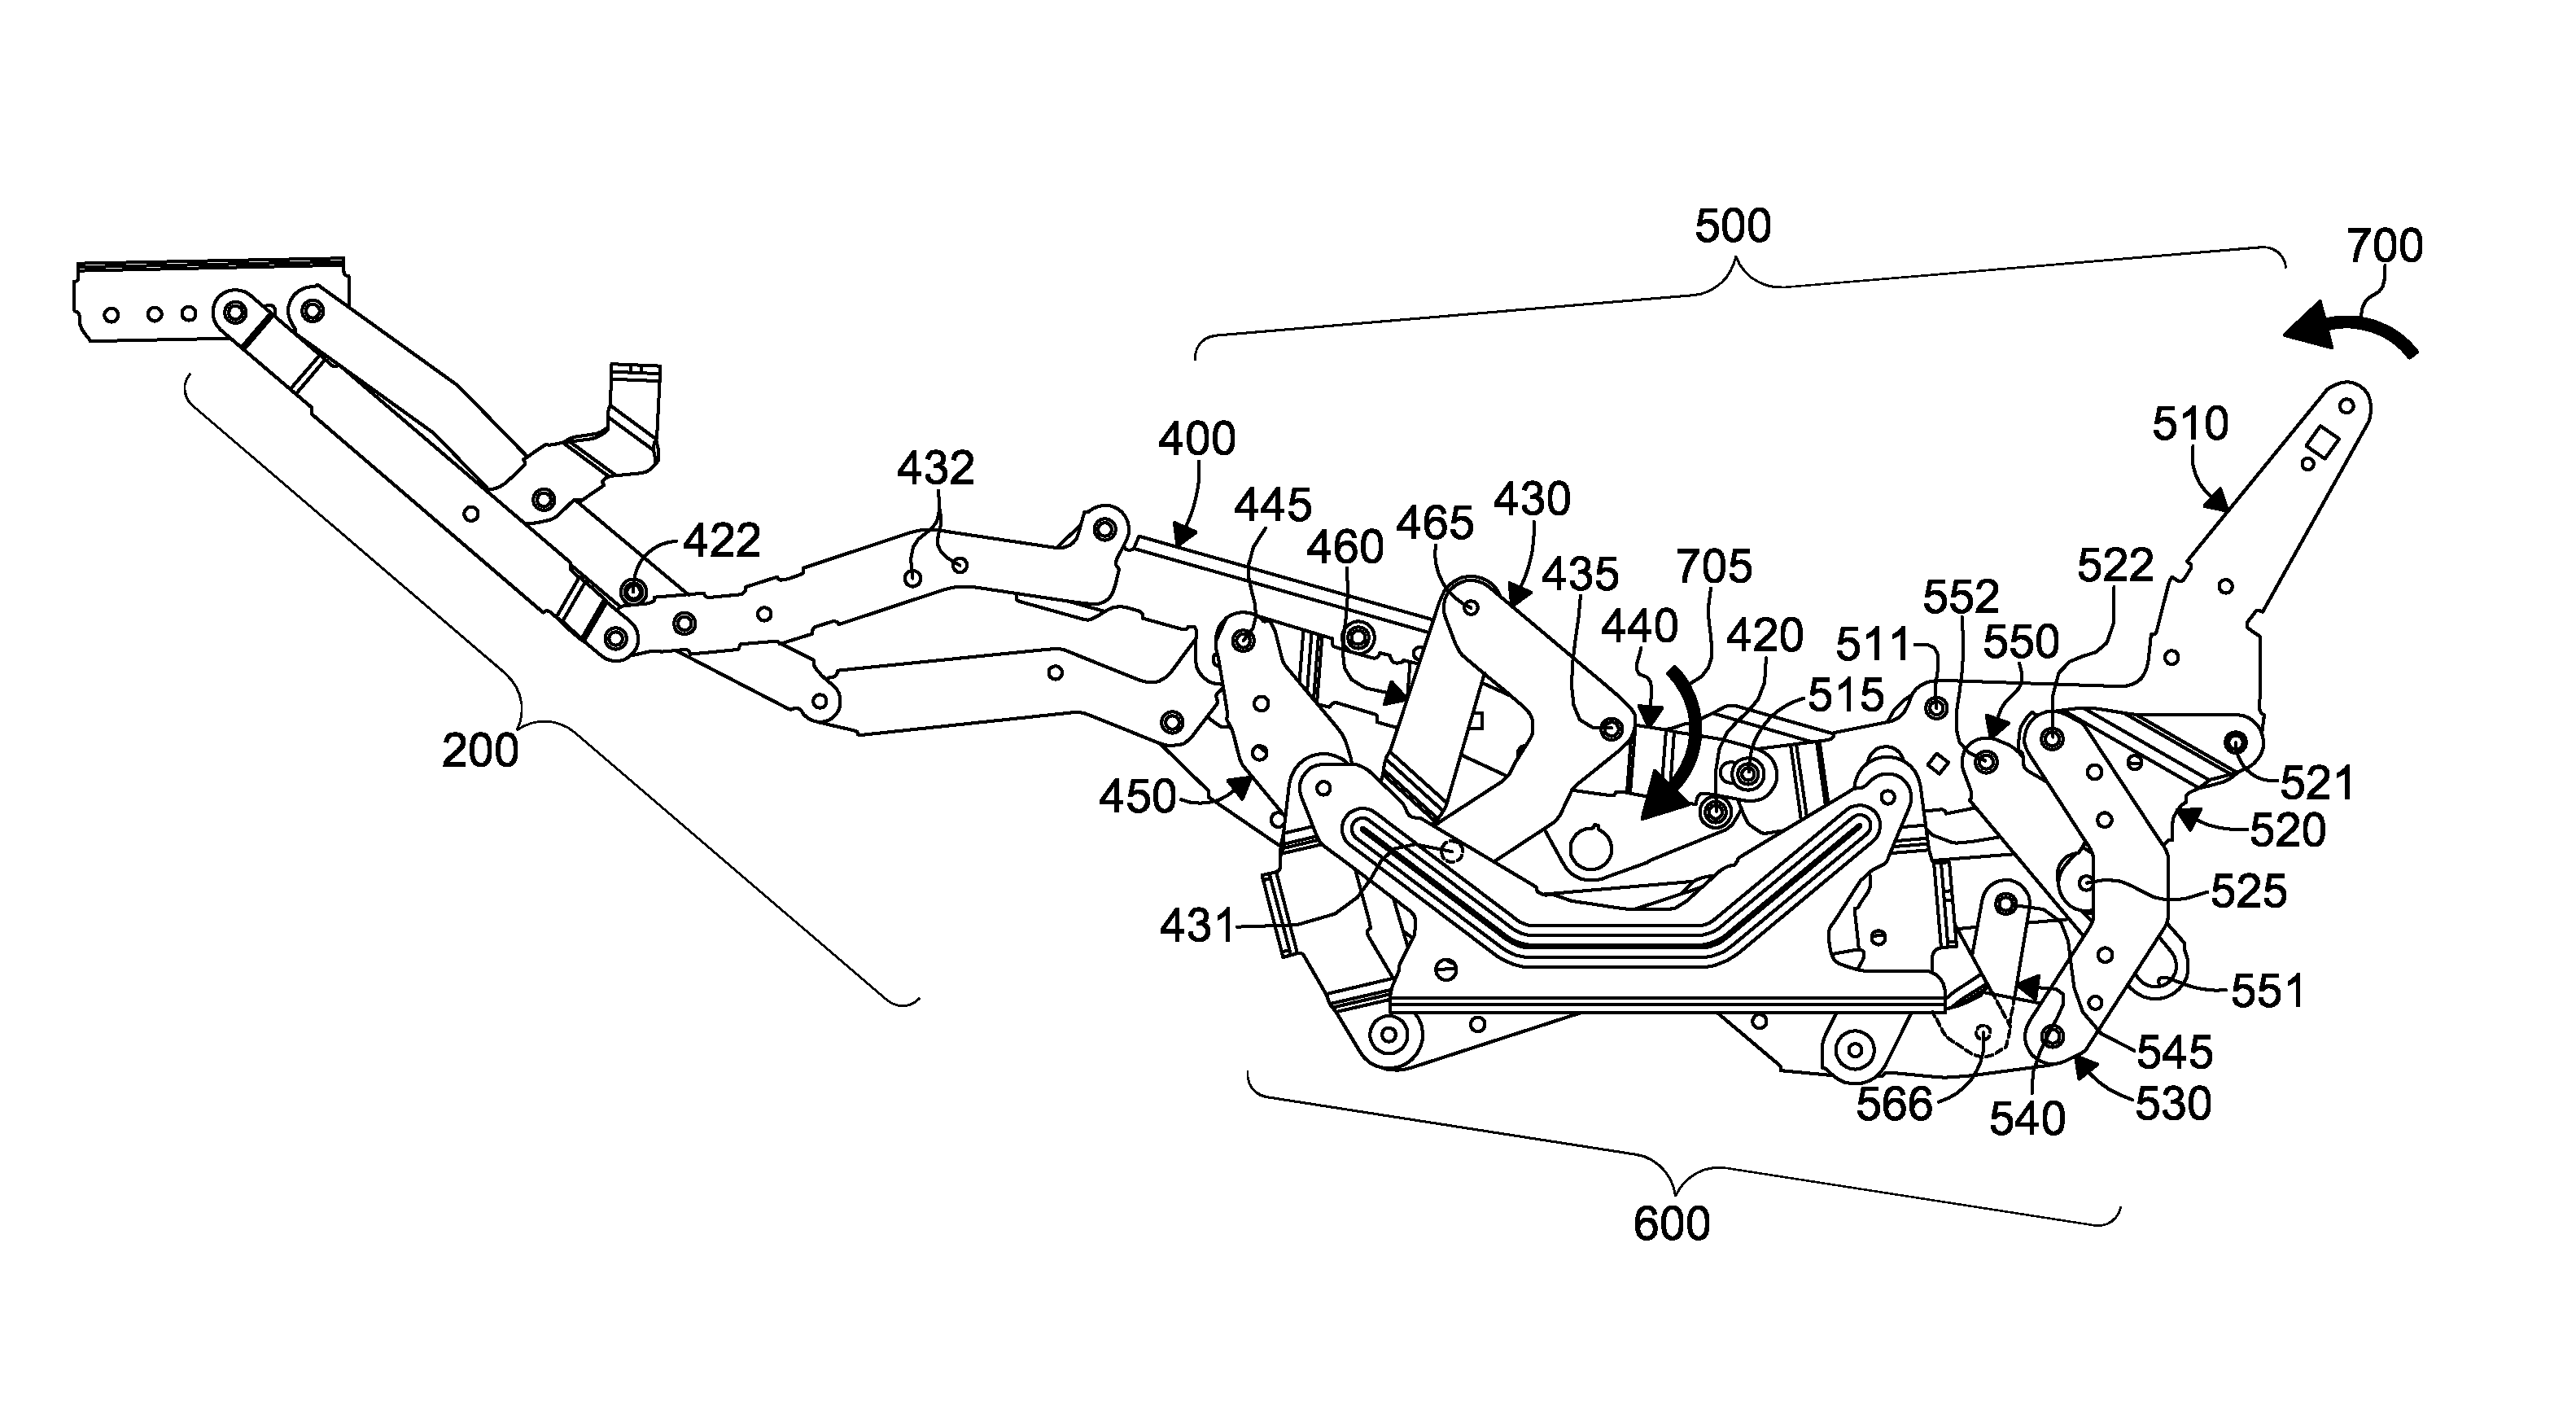 Powered glider recliner linkage mechanism